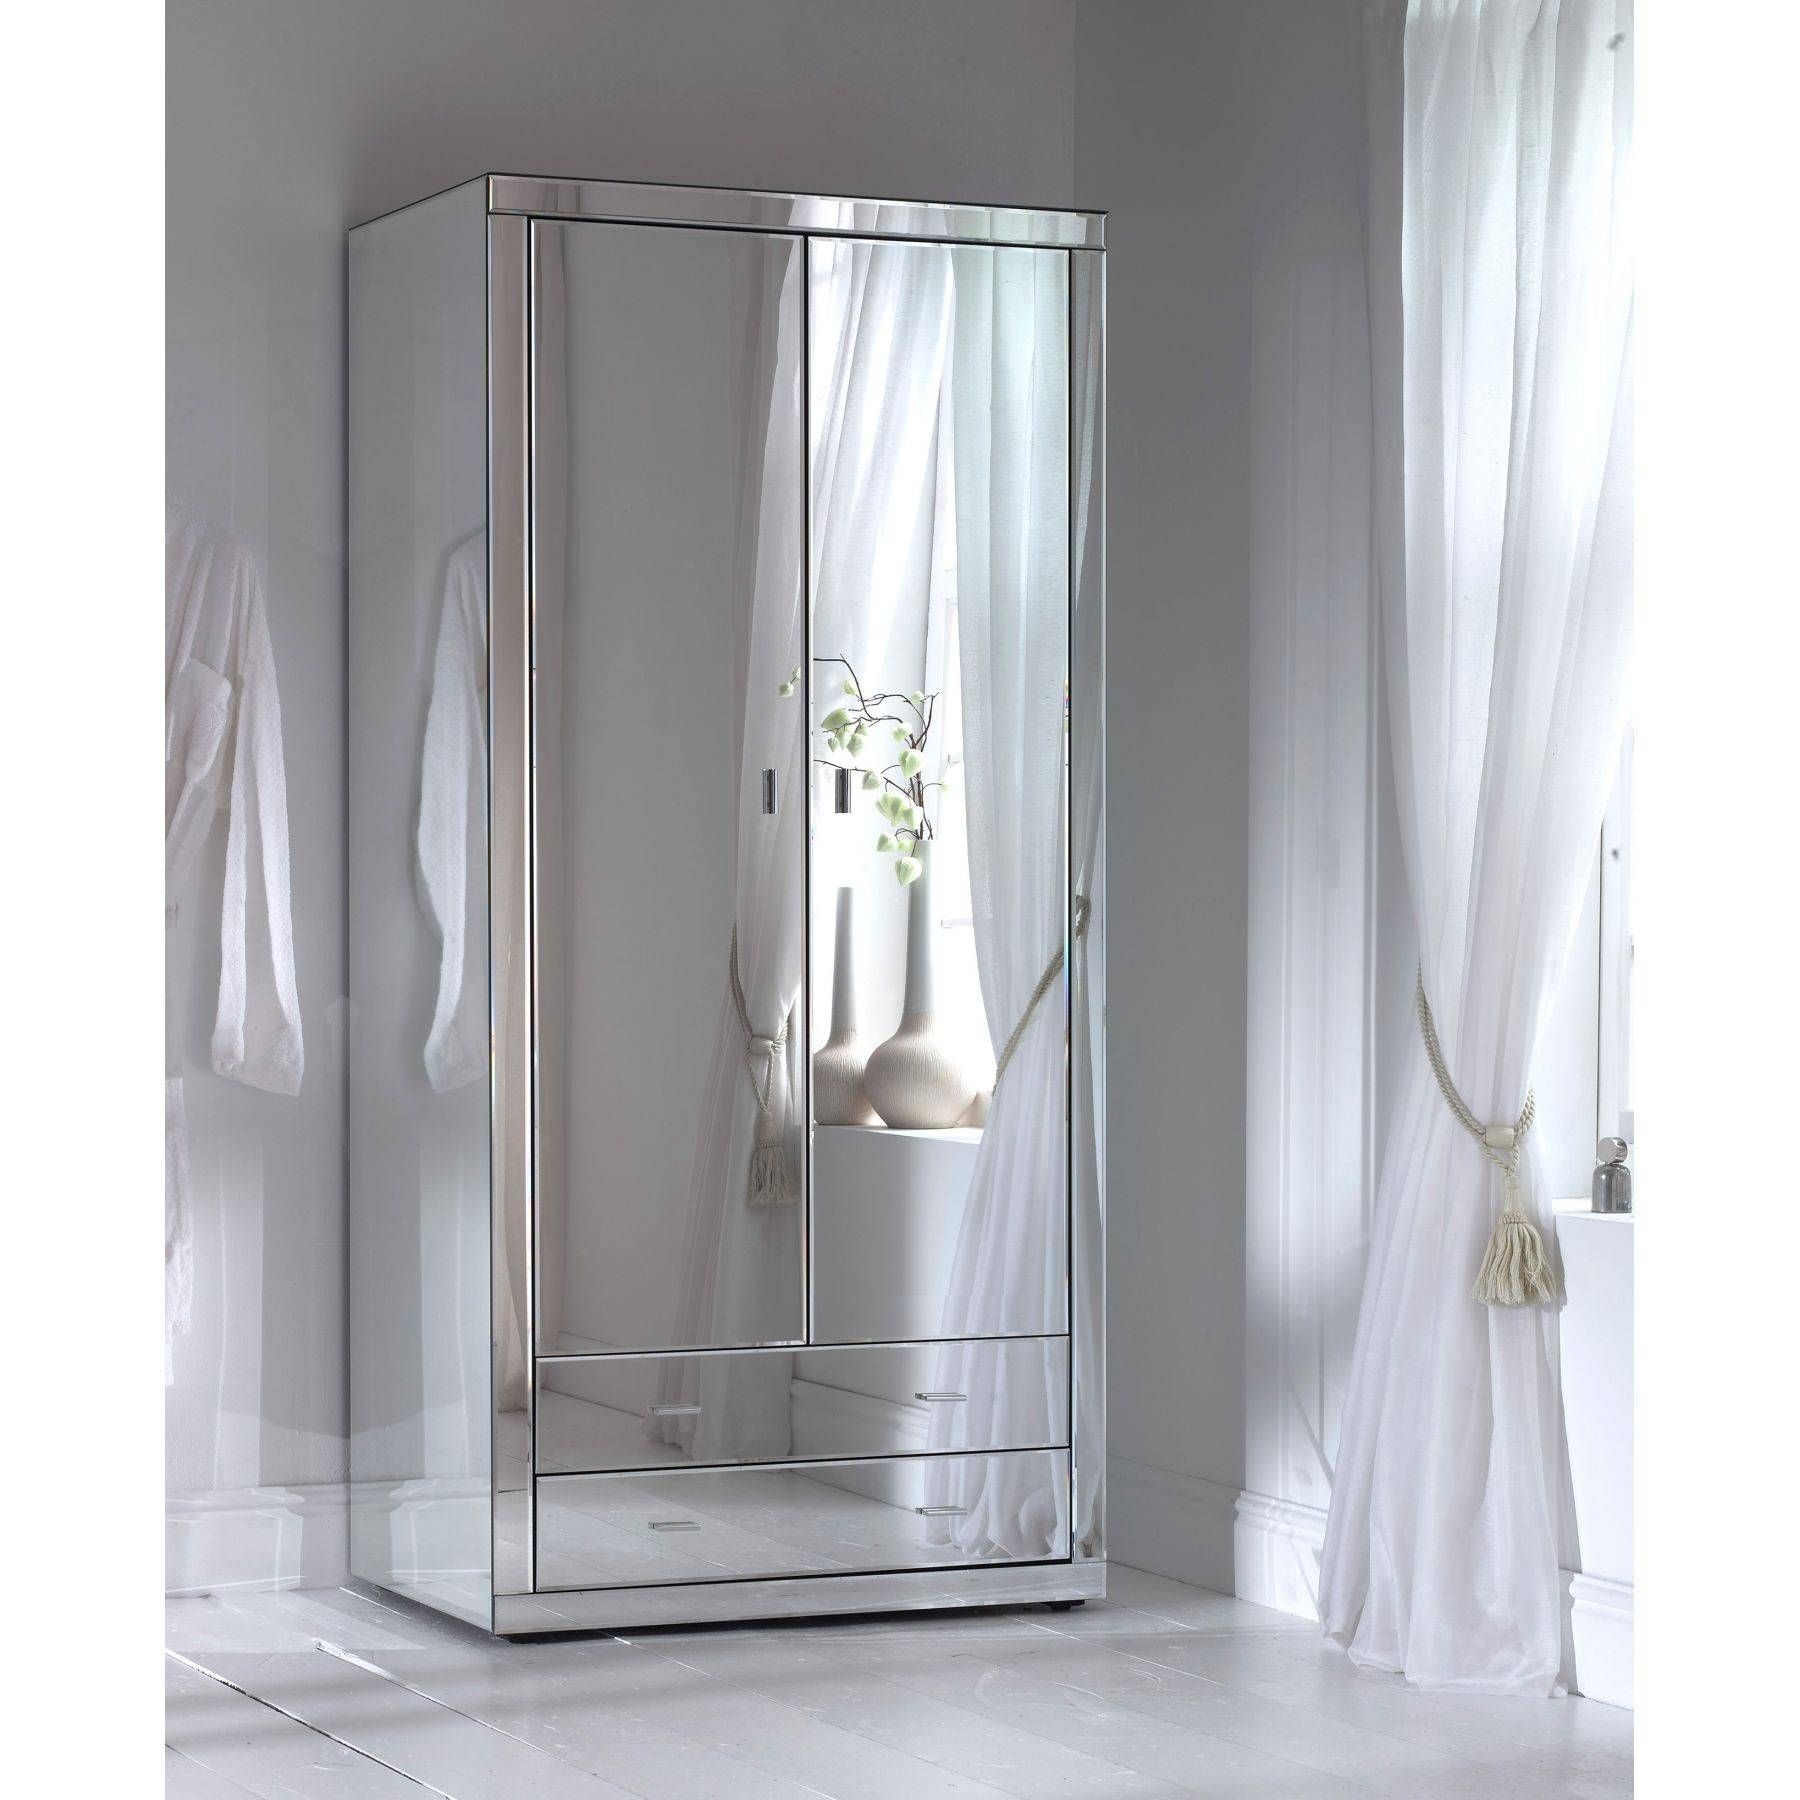 Mirrored Wardrobe + Romano Mirrored Bedside 3 Drawer + Romano Within Mirrored Wardrobes With Drawers (View 2 of 15)